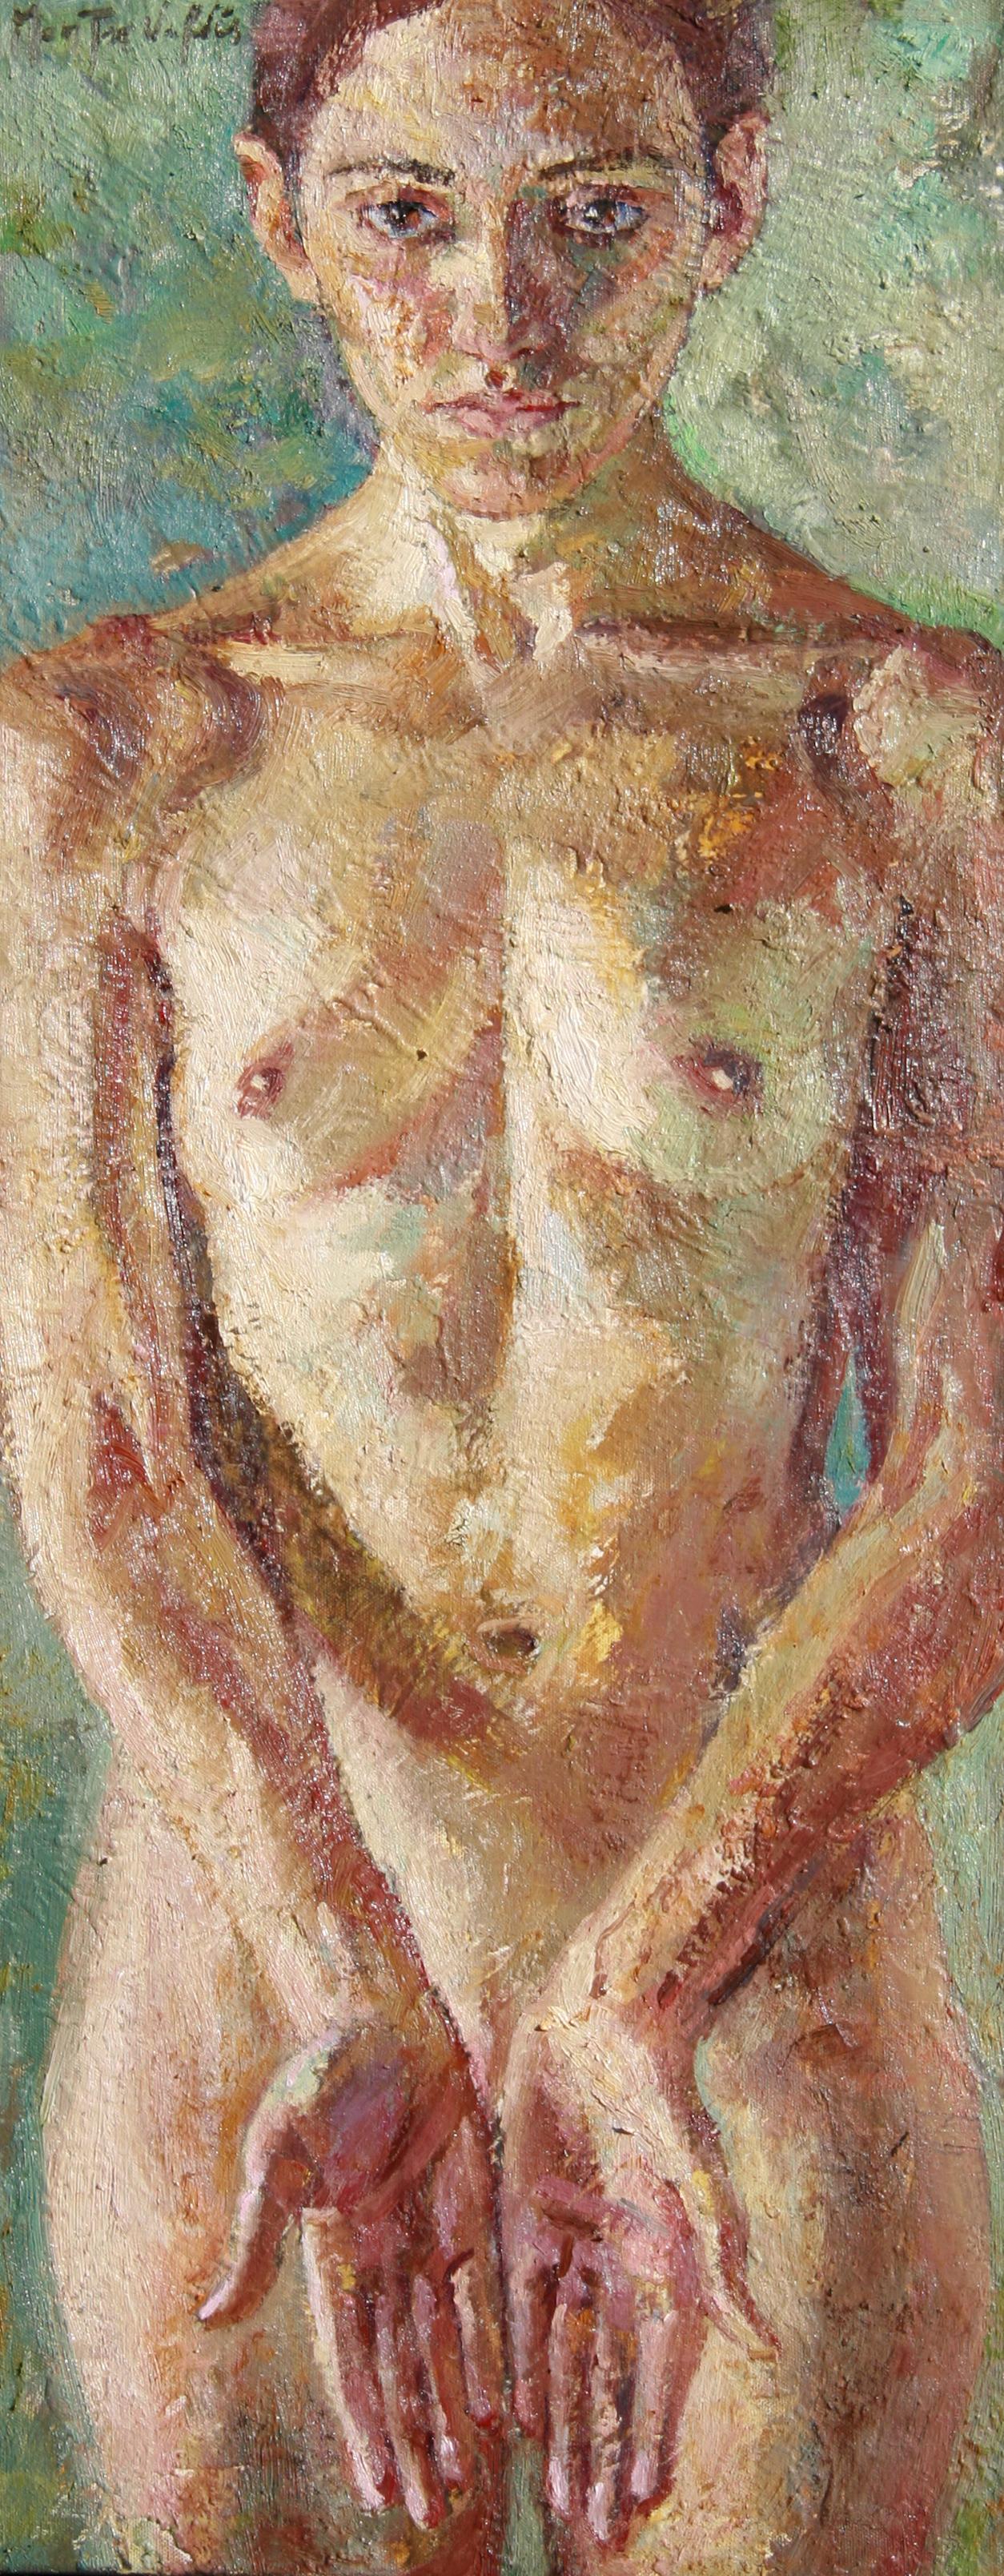 Montse Valdés Portrait Painting - 5-11-08 - 21st Century, Contemporary, Nude Painting, Oil on Canvas